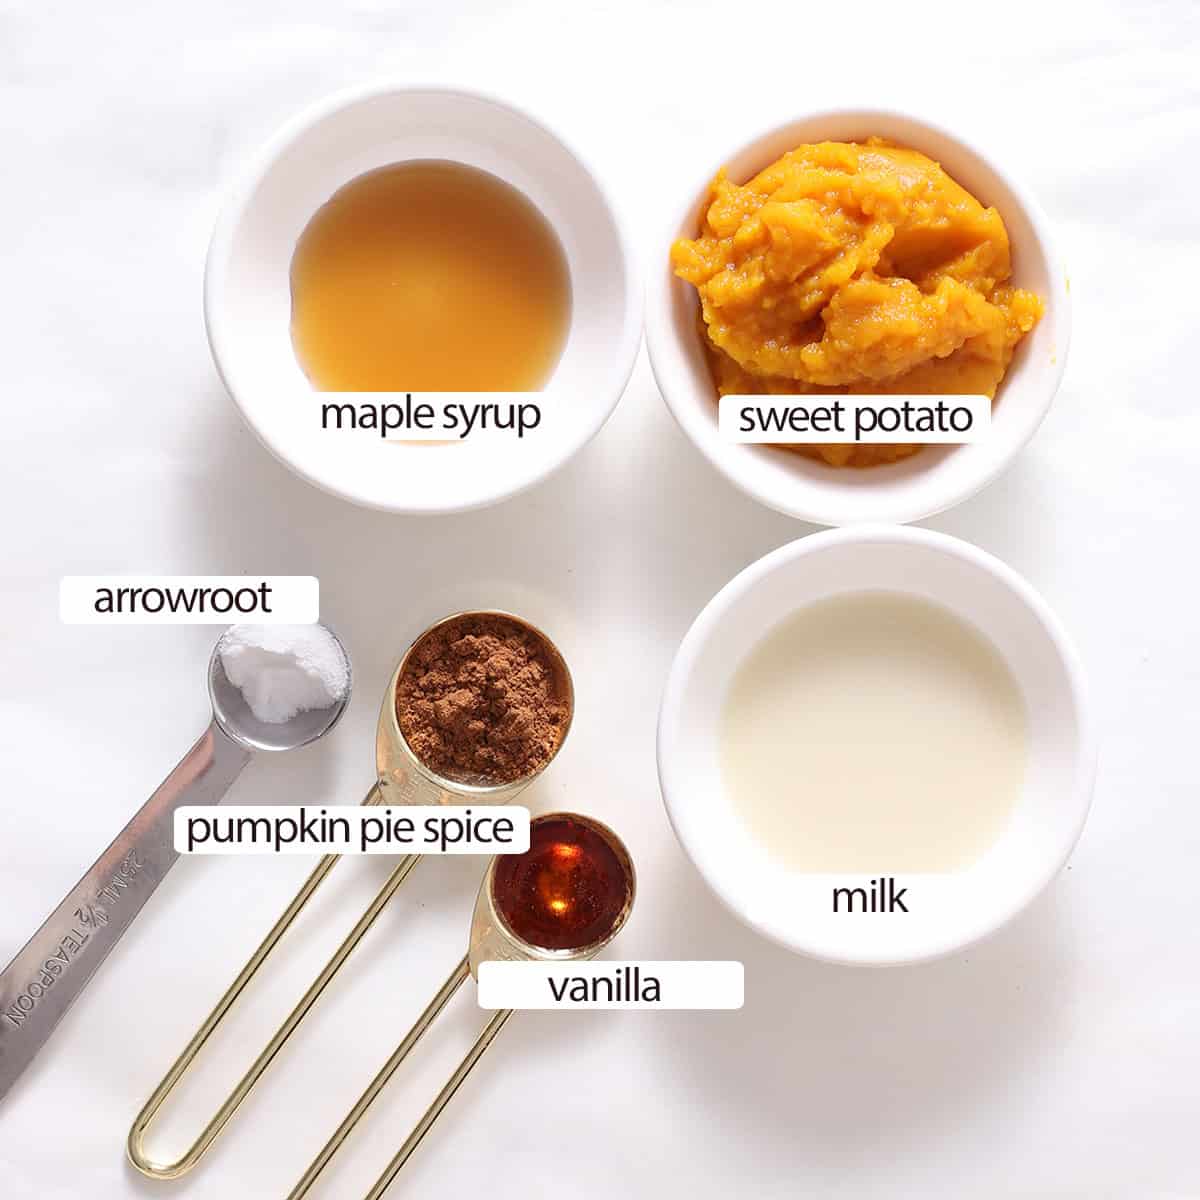 sweet potato ingredients.